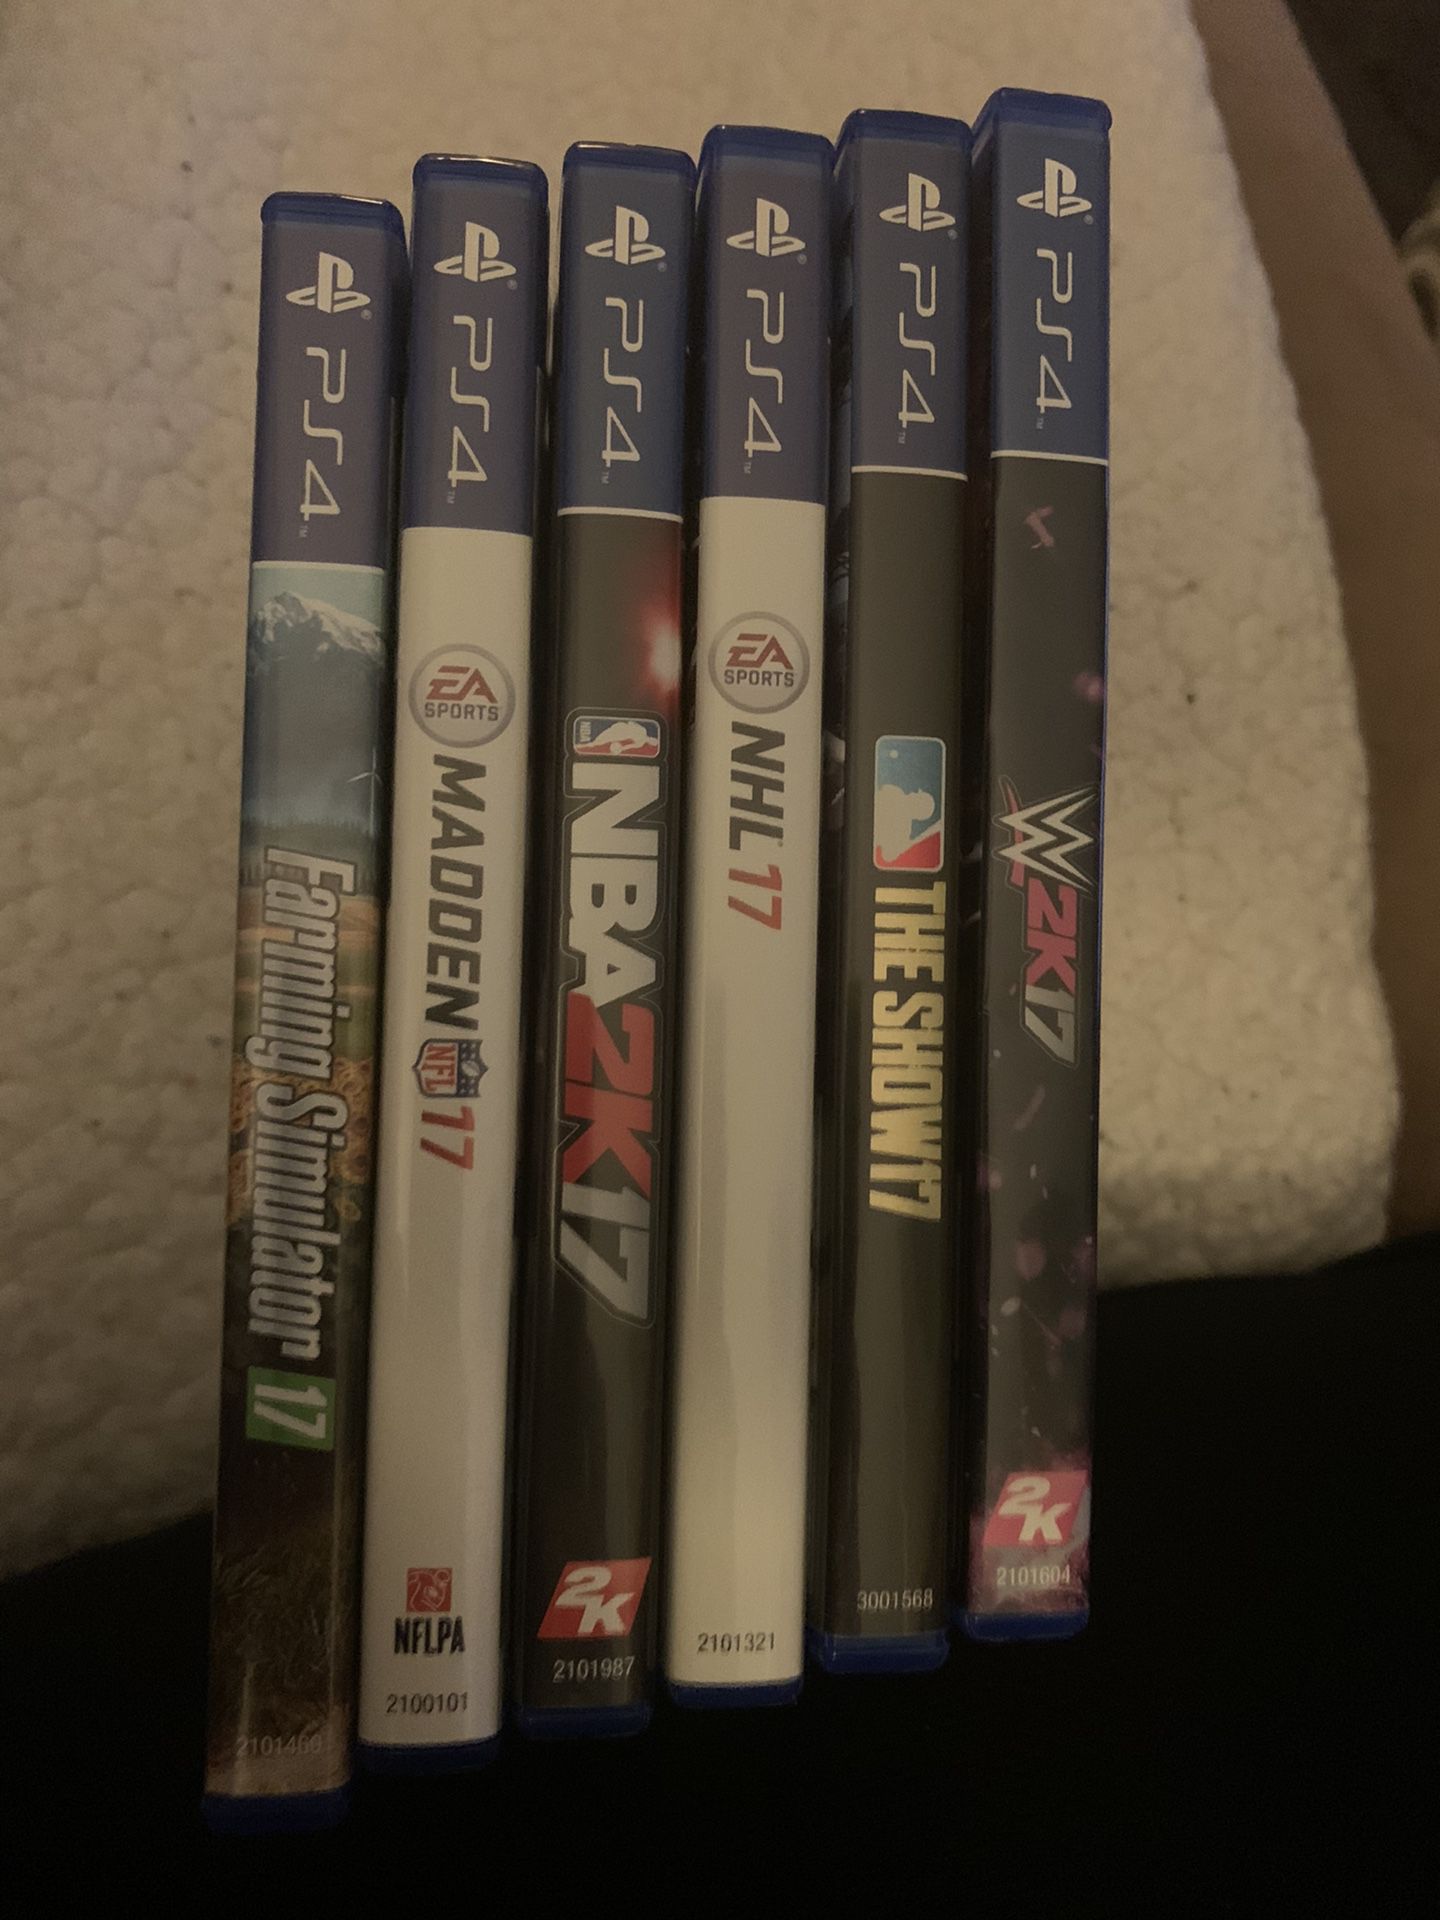 PS4 17 games